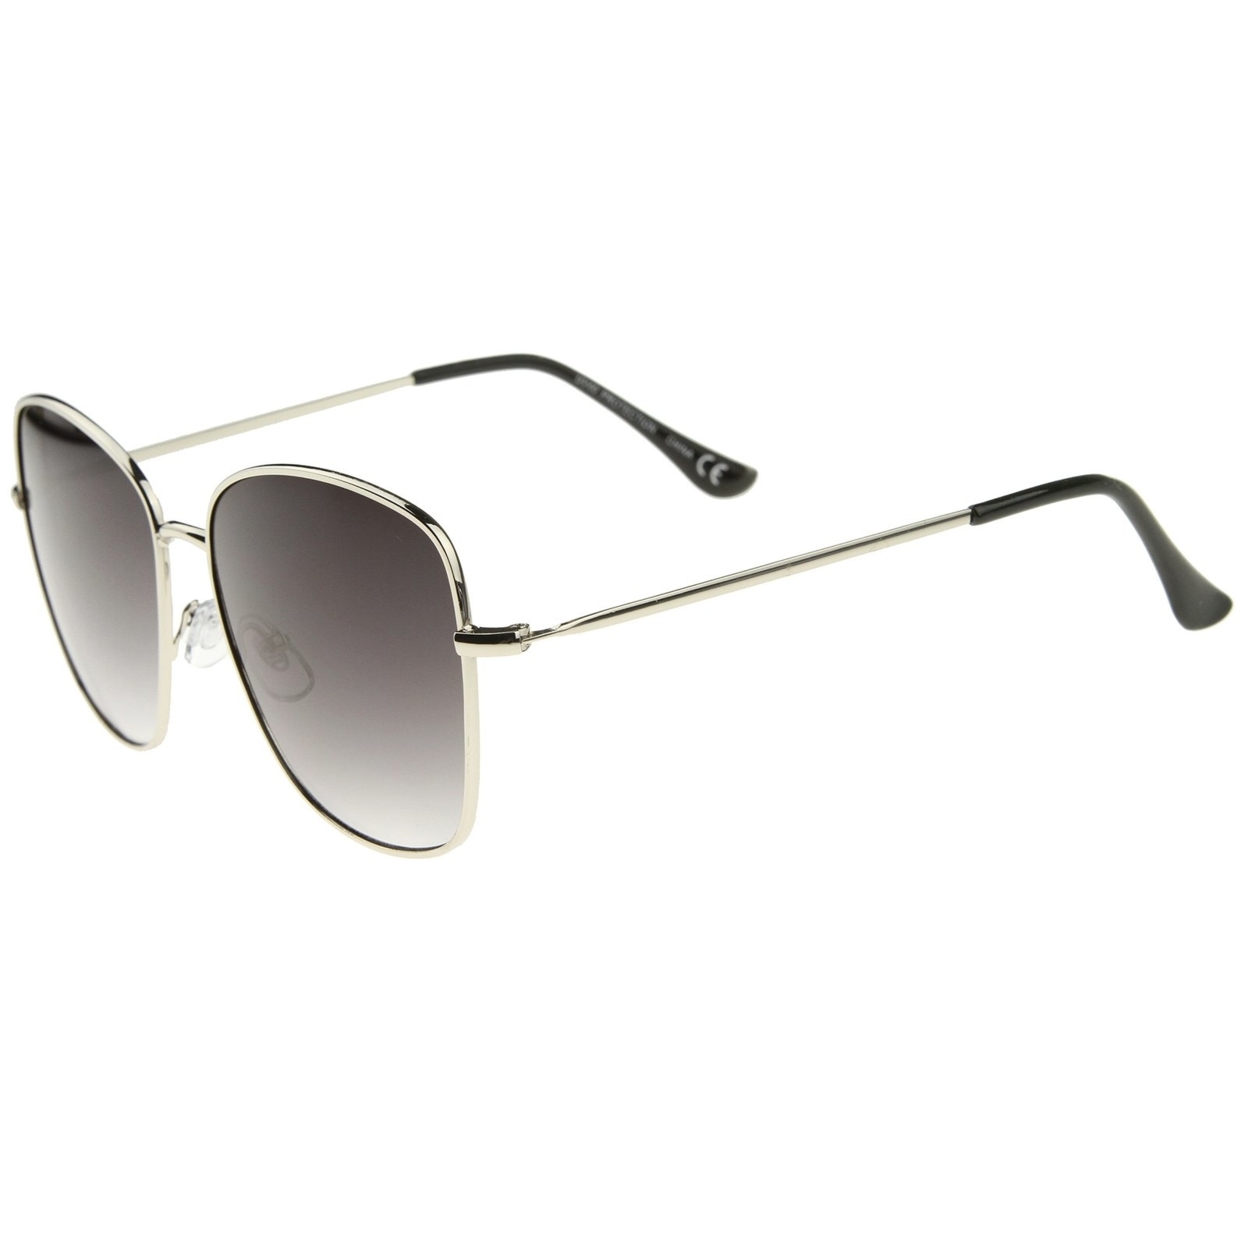 Contemporary Modern Fashion Full Metal Slim Temple Square Sunglasses 57mm - Shiny Silver / Smoke